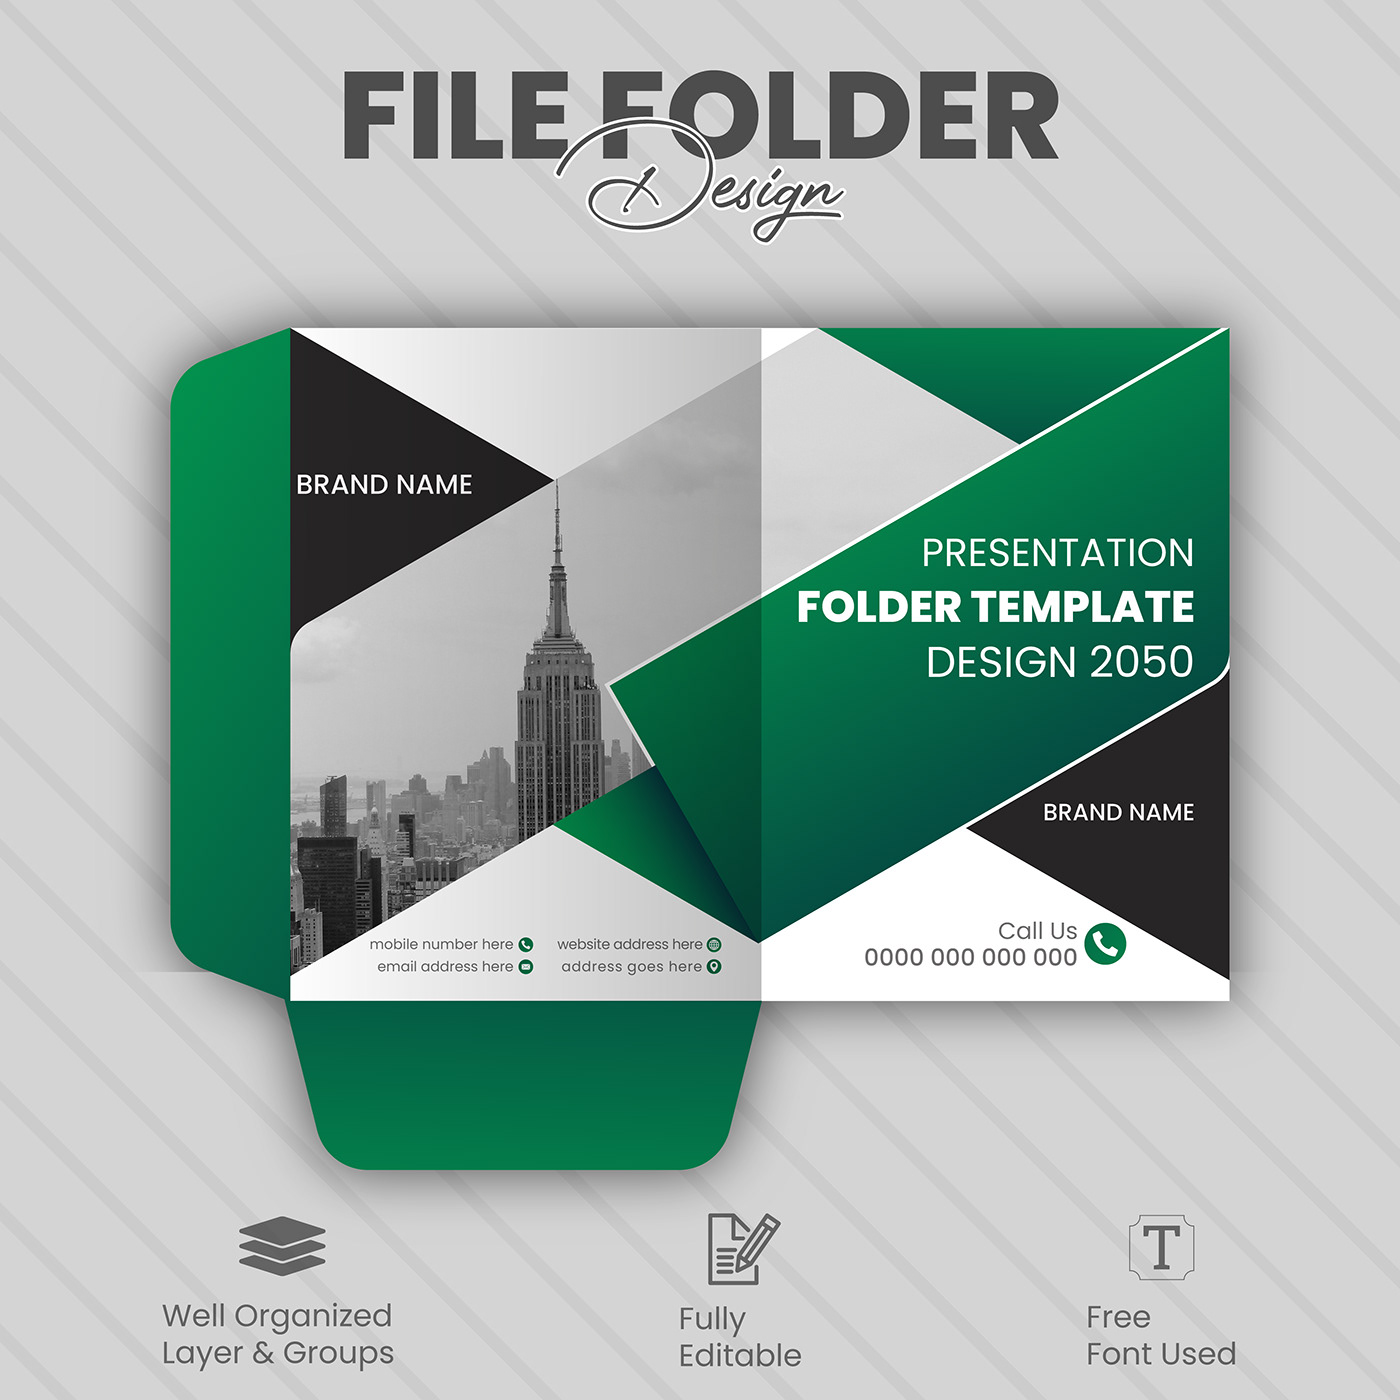 report cover presentation annual report Brand Presentation brandbook File folder folder Company folder pocket folder Document cover